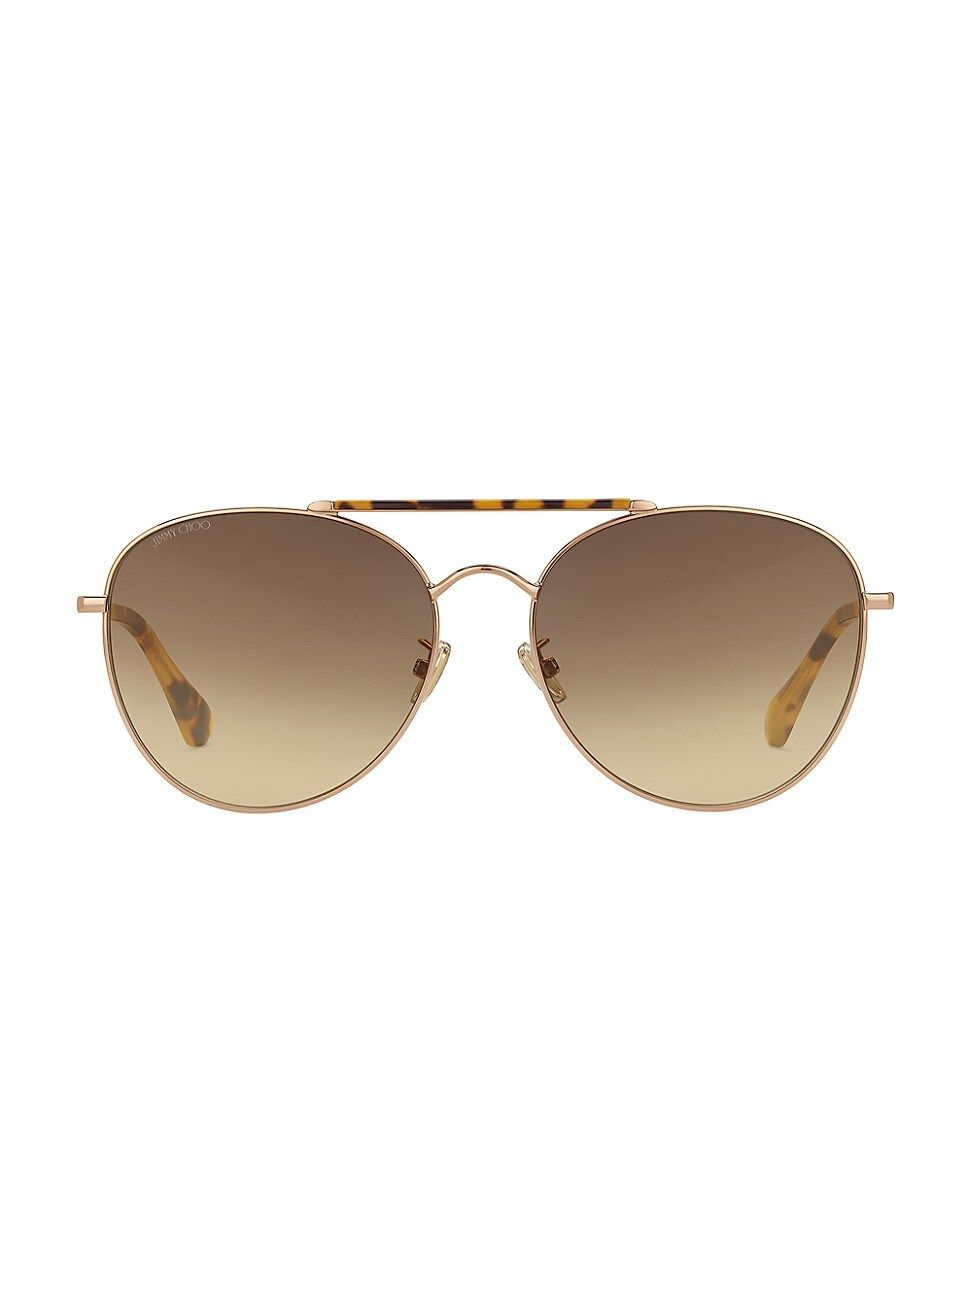 Jimmy Choo Women's Abbie 61MM Aviator Sunglasses - Gold | Saks Fifth Avenue